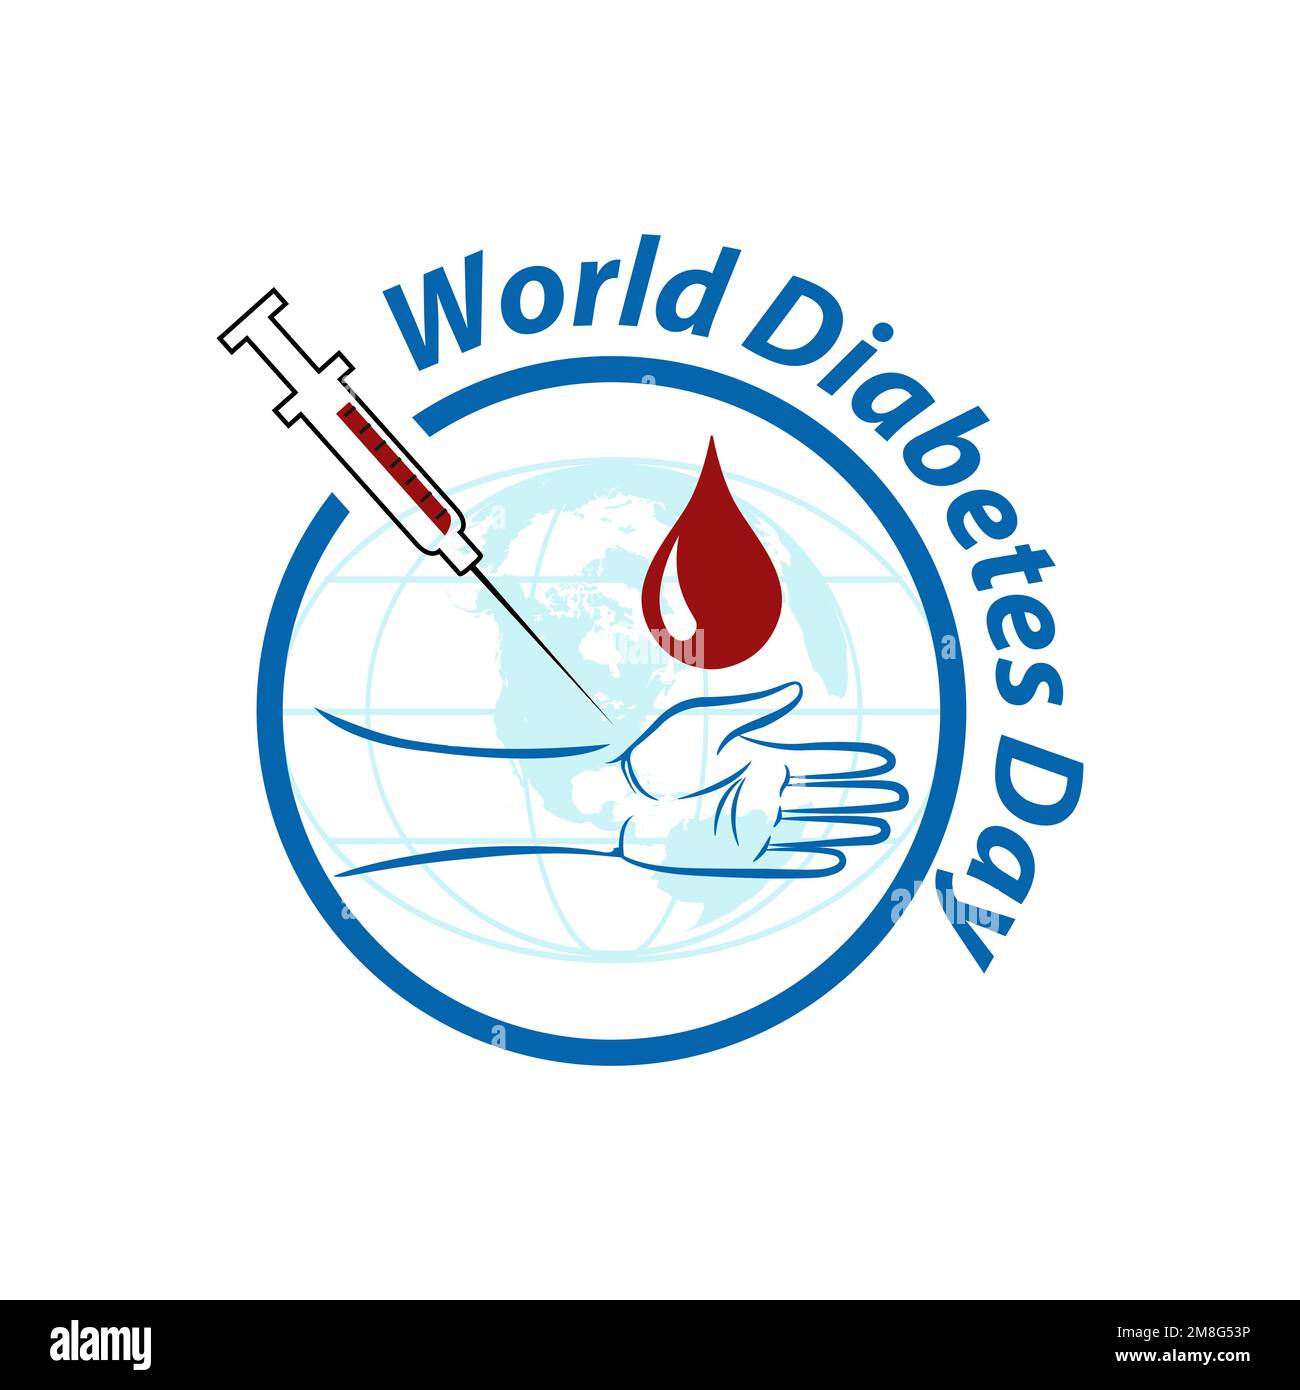 Weltdiabetes-Tag-Aufklärungsposter Bluttropfensymbol mit blauem kreisförmigem Rahmen Logo-Design.EPS 10 Stock Vektor